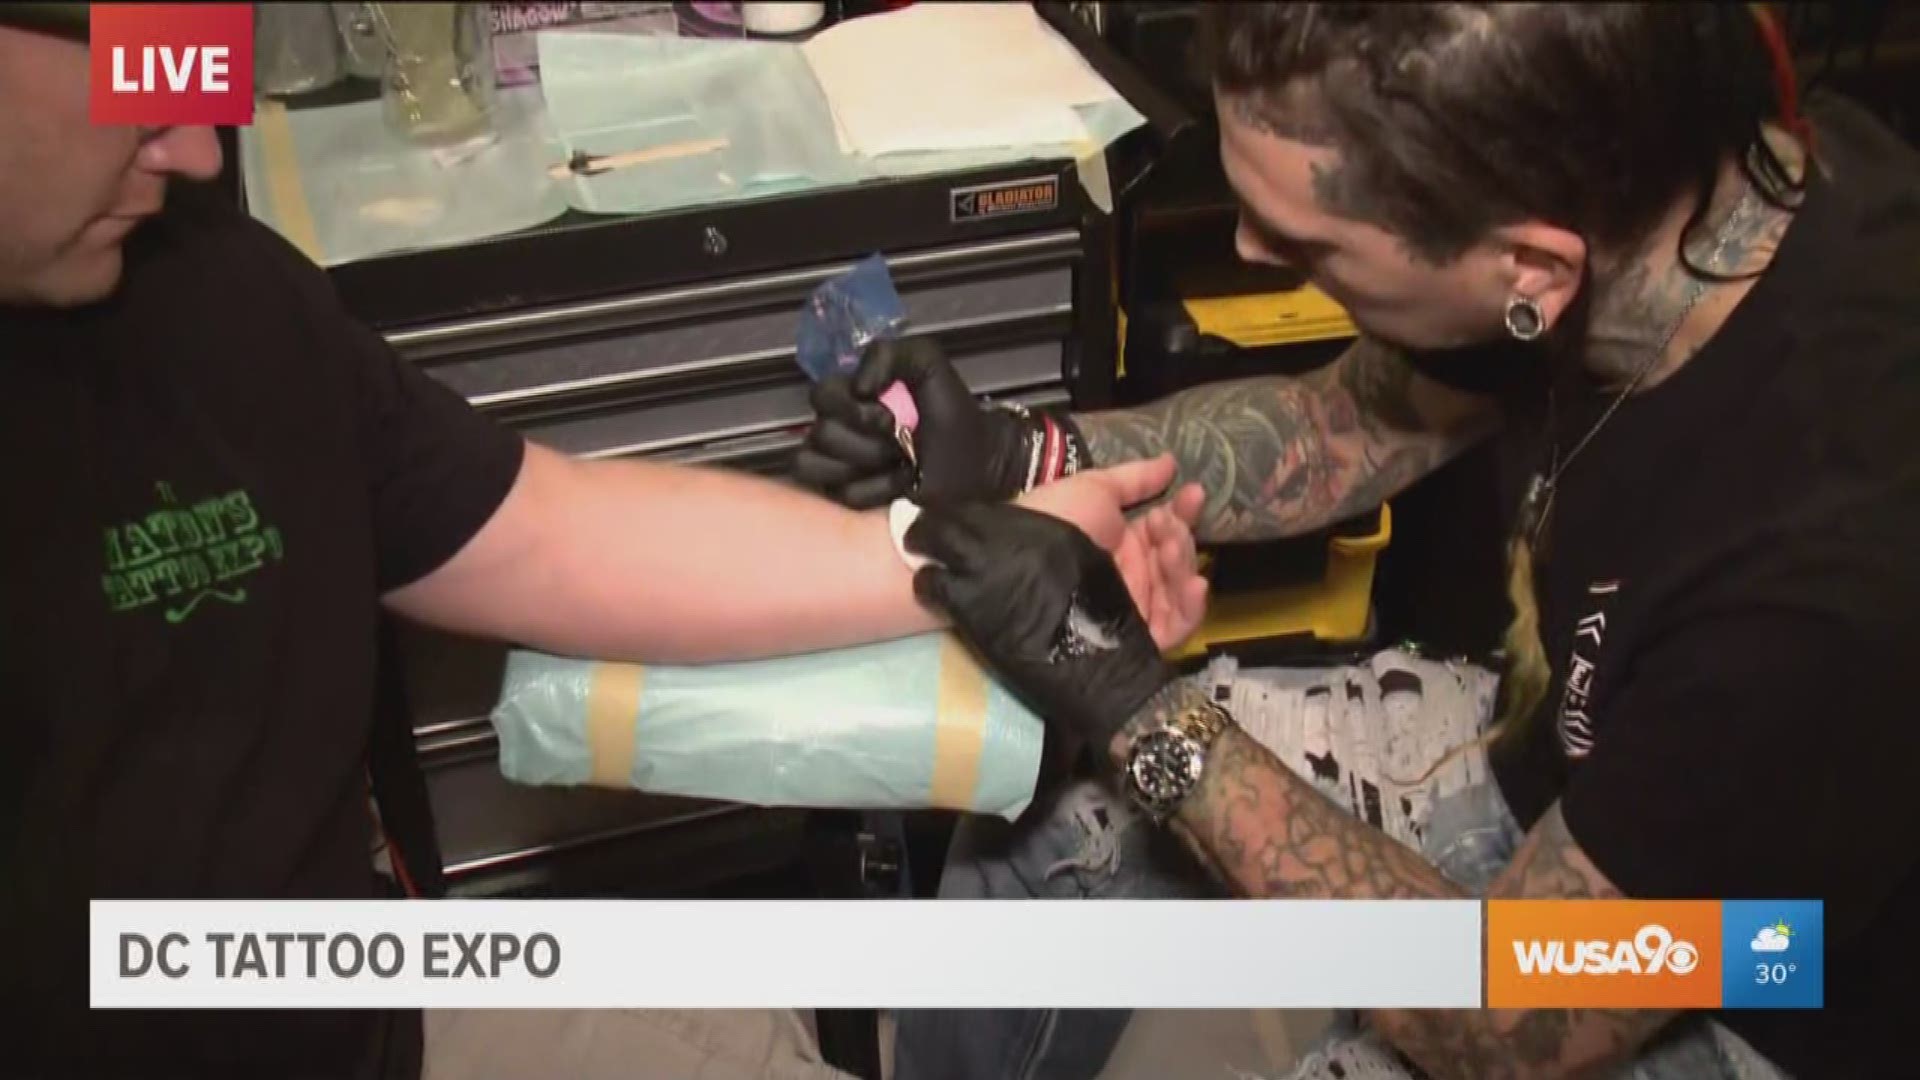 DC Tattoo Expo coming to Arlington this weekend  ARLnowcom